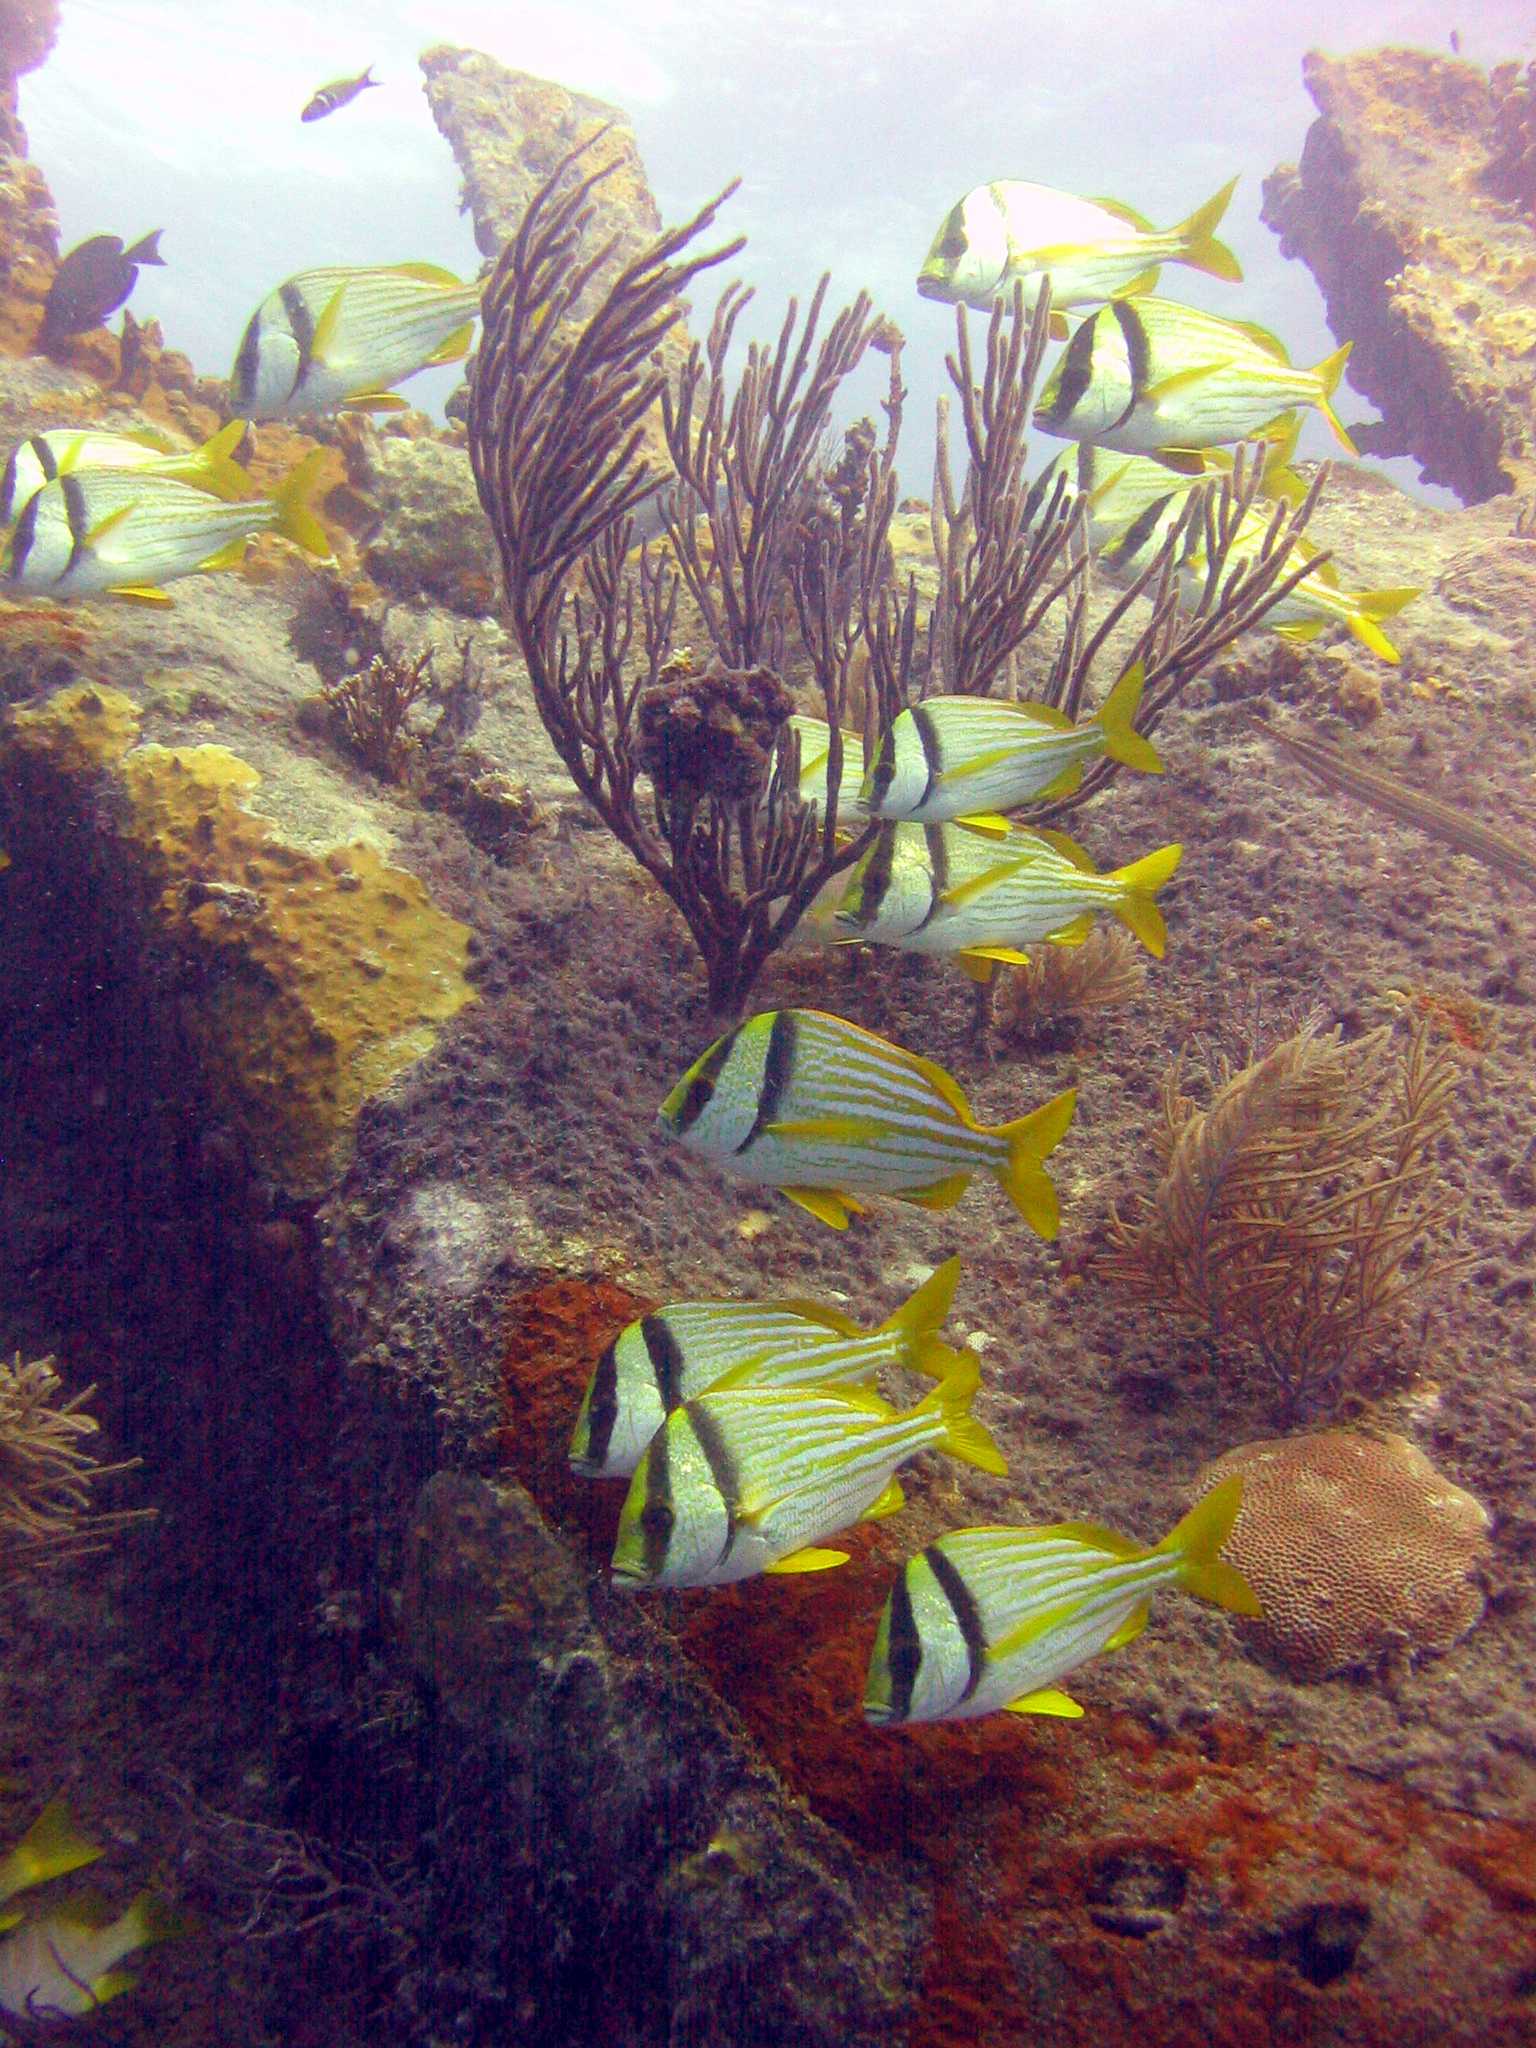 Some fish at the Benwood - Key Largo